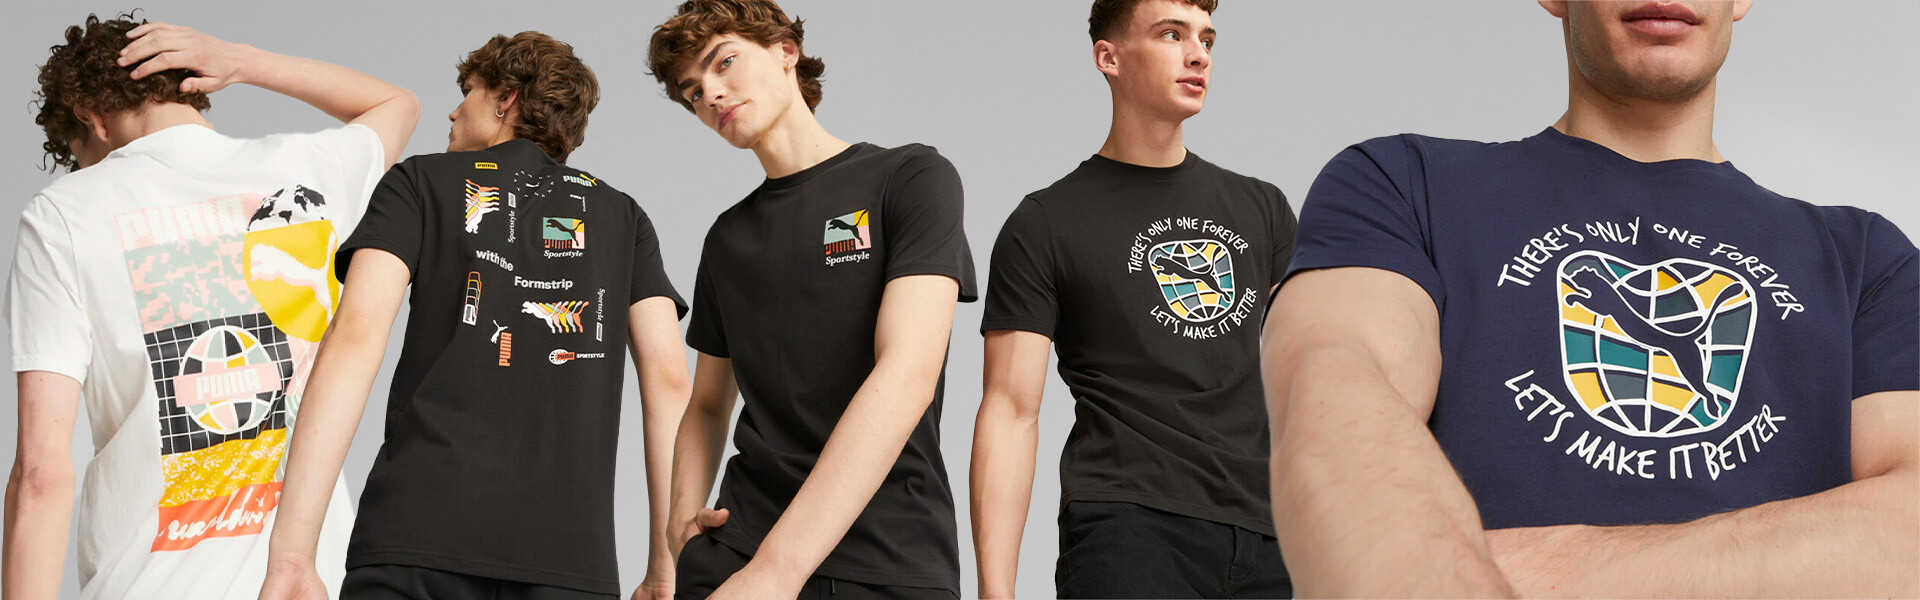 Camiseta Fútbol y Short Modelo Palermo Celeste Negro – Tienda Four